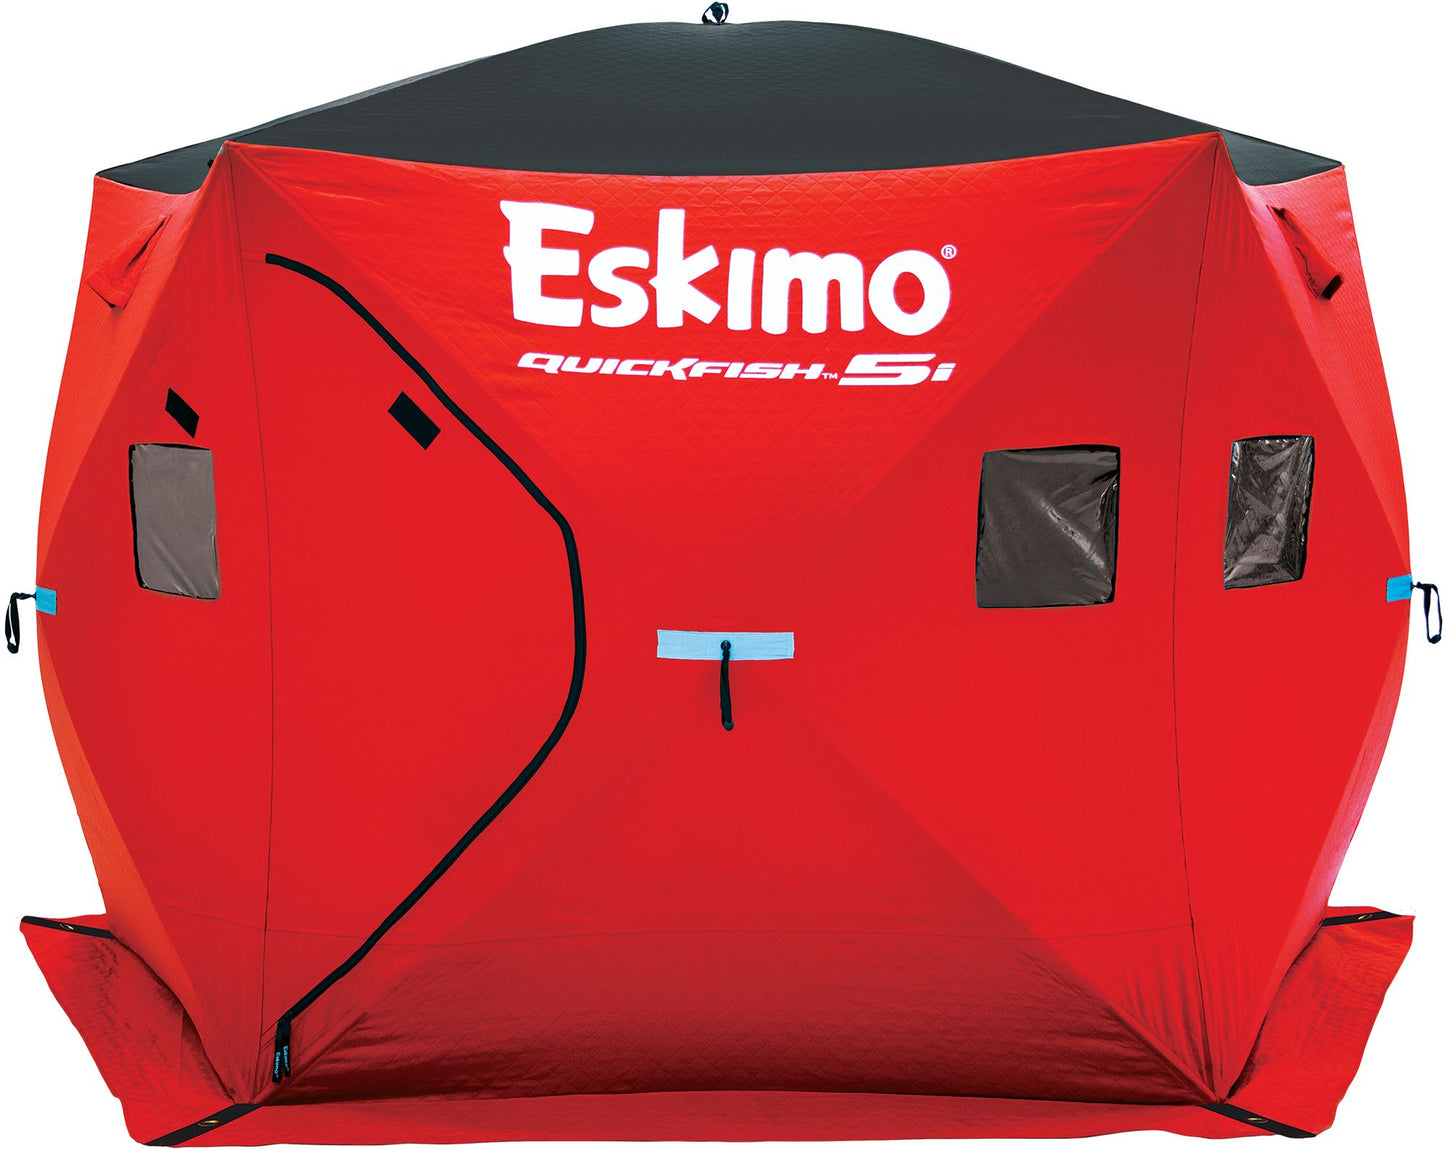 Eskimo Quickfish 5i 5-Person Insulated Ice Shelter